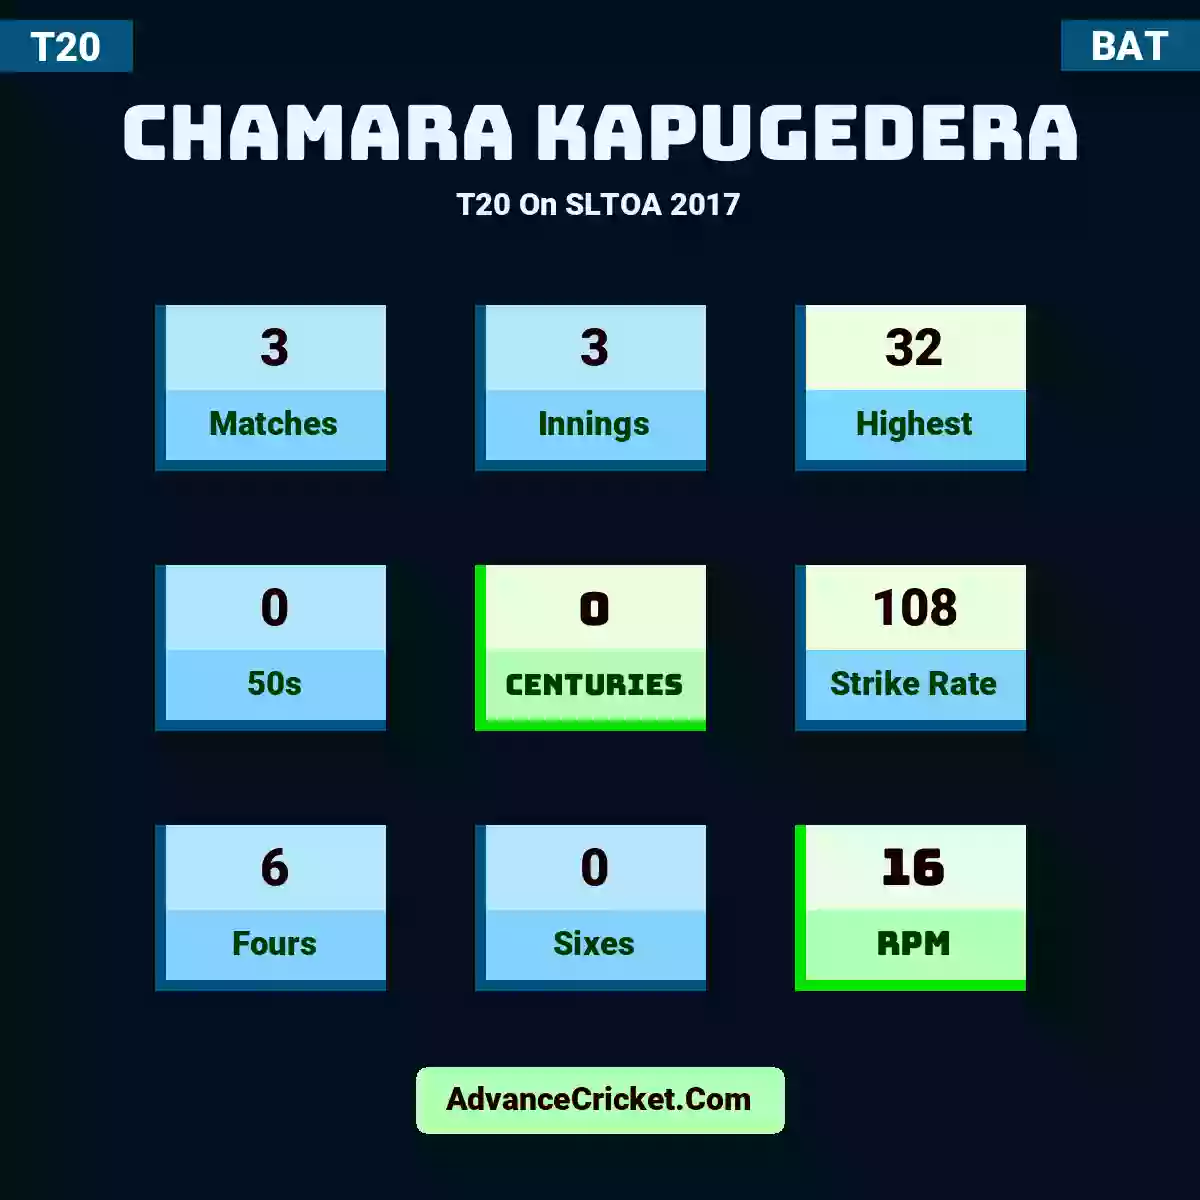 Chamara Kapugedera T20  On SLTOA 2017, Chamara Kapugedera played 3 matches, scored 32 runs as highest, 0 half-centuries, and 0 centuries, with a strike rate of 108. C.Kapugedera hit 6 fours and 0 sixes, with an RPM of 16.